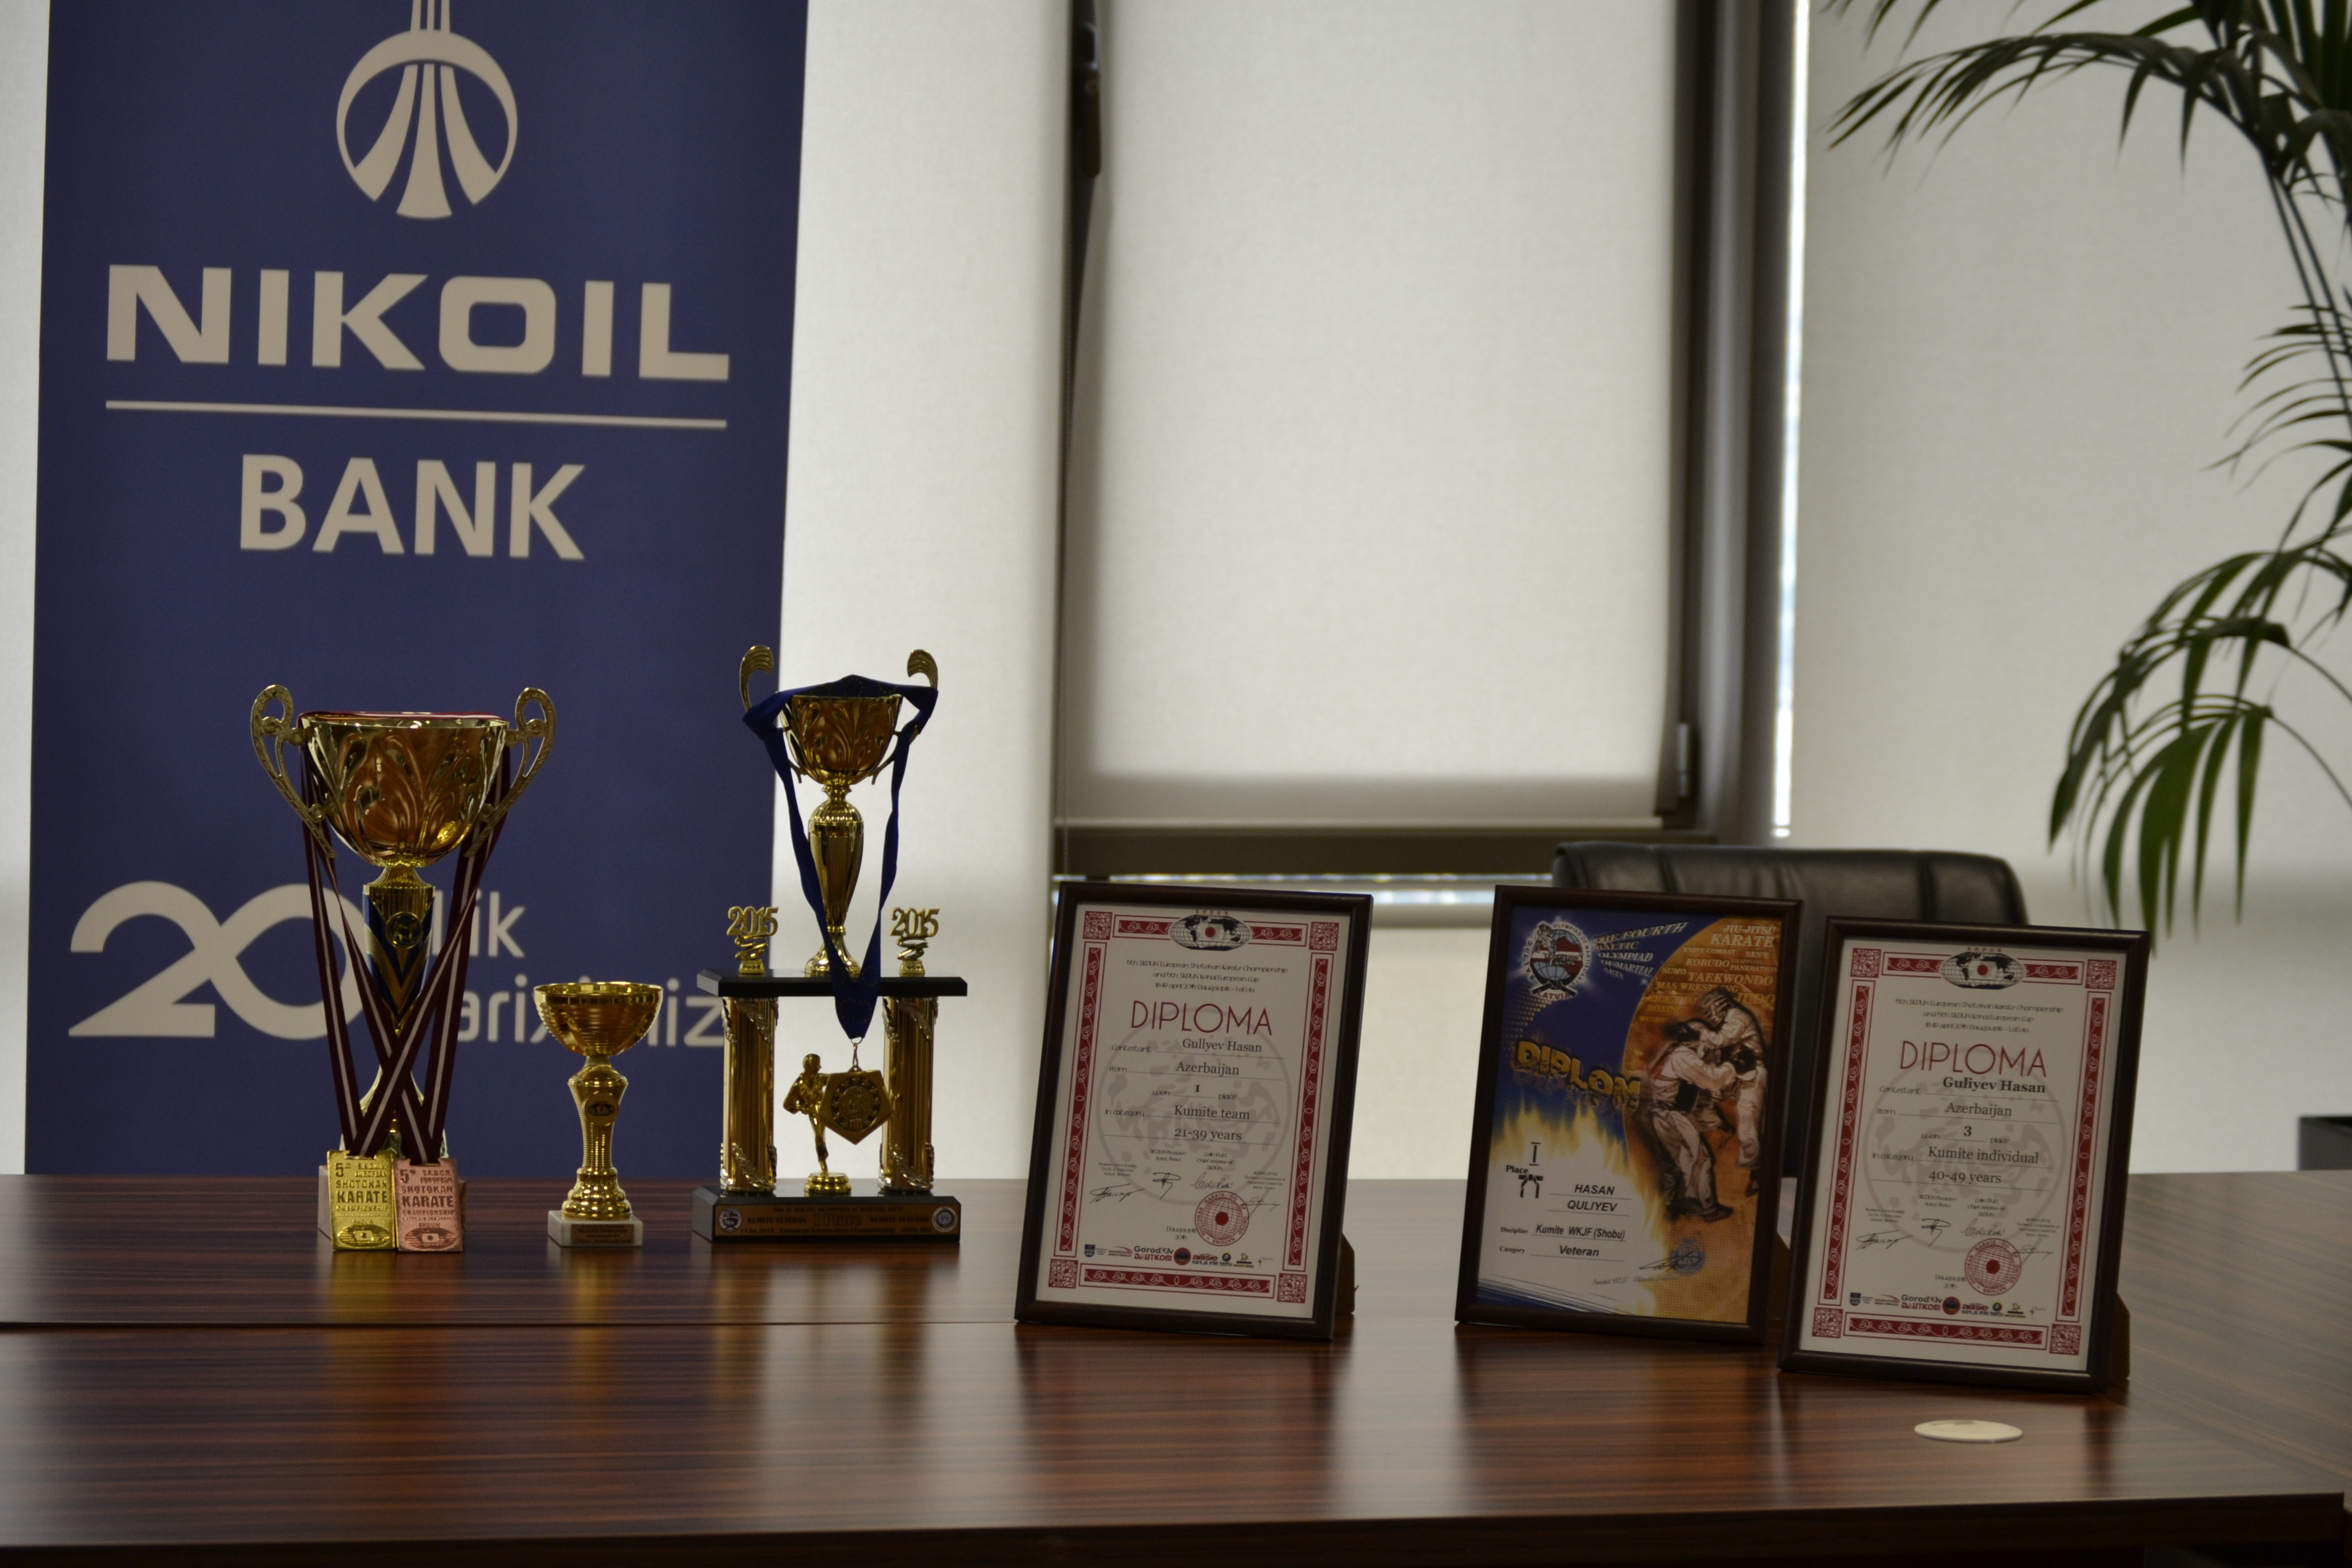 NIKOIL | Bank активно поддерживает развитие спорта